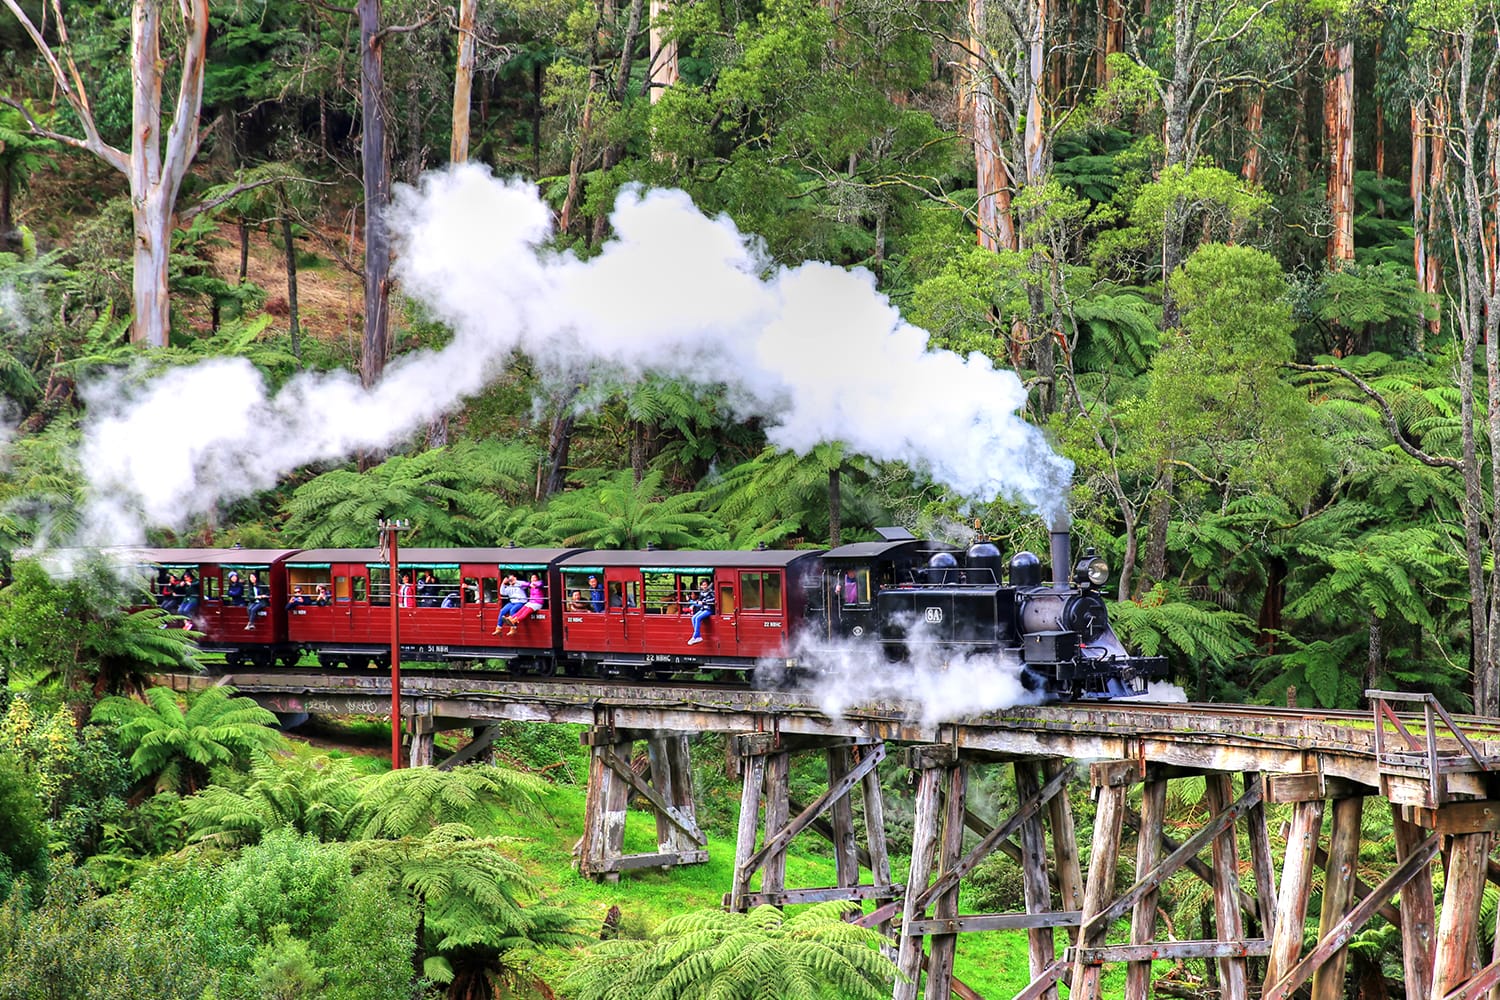 The Puffing Billy narrow gauge steam train crossing the Belgrave trestle bridge in The Dandenong Ranges, Australia